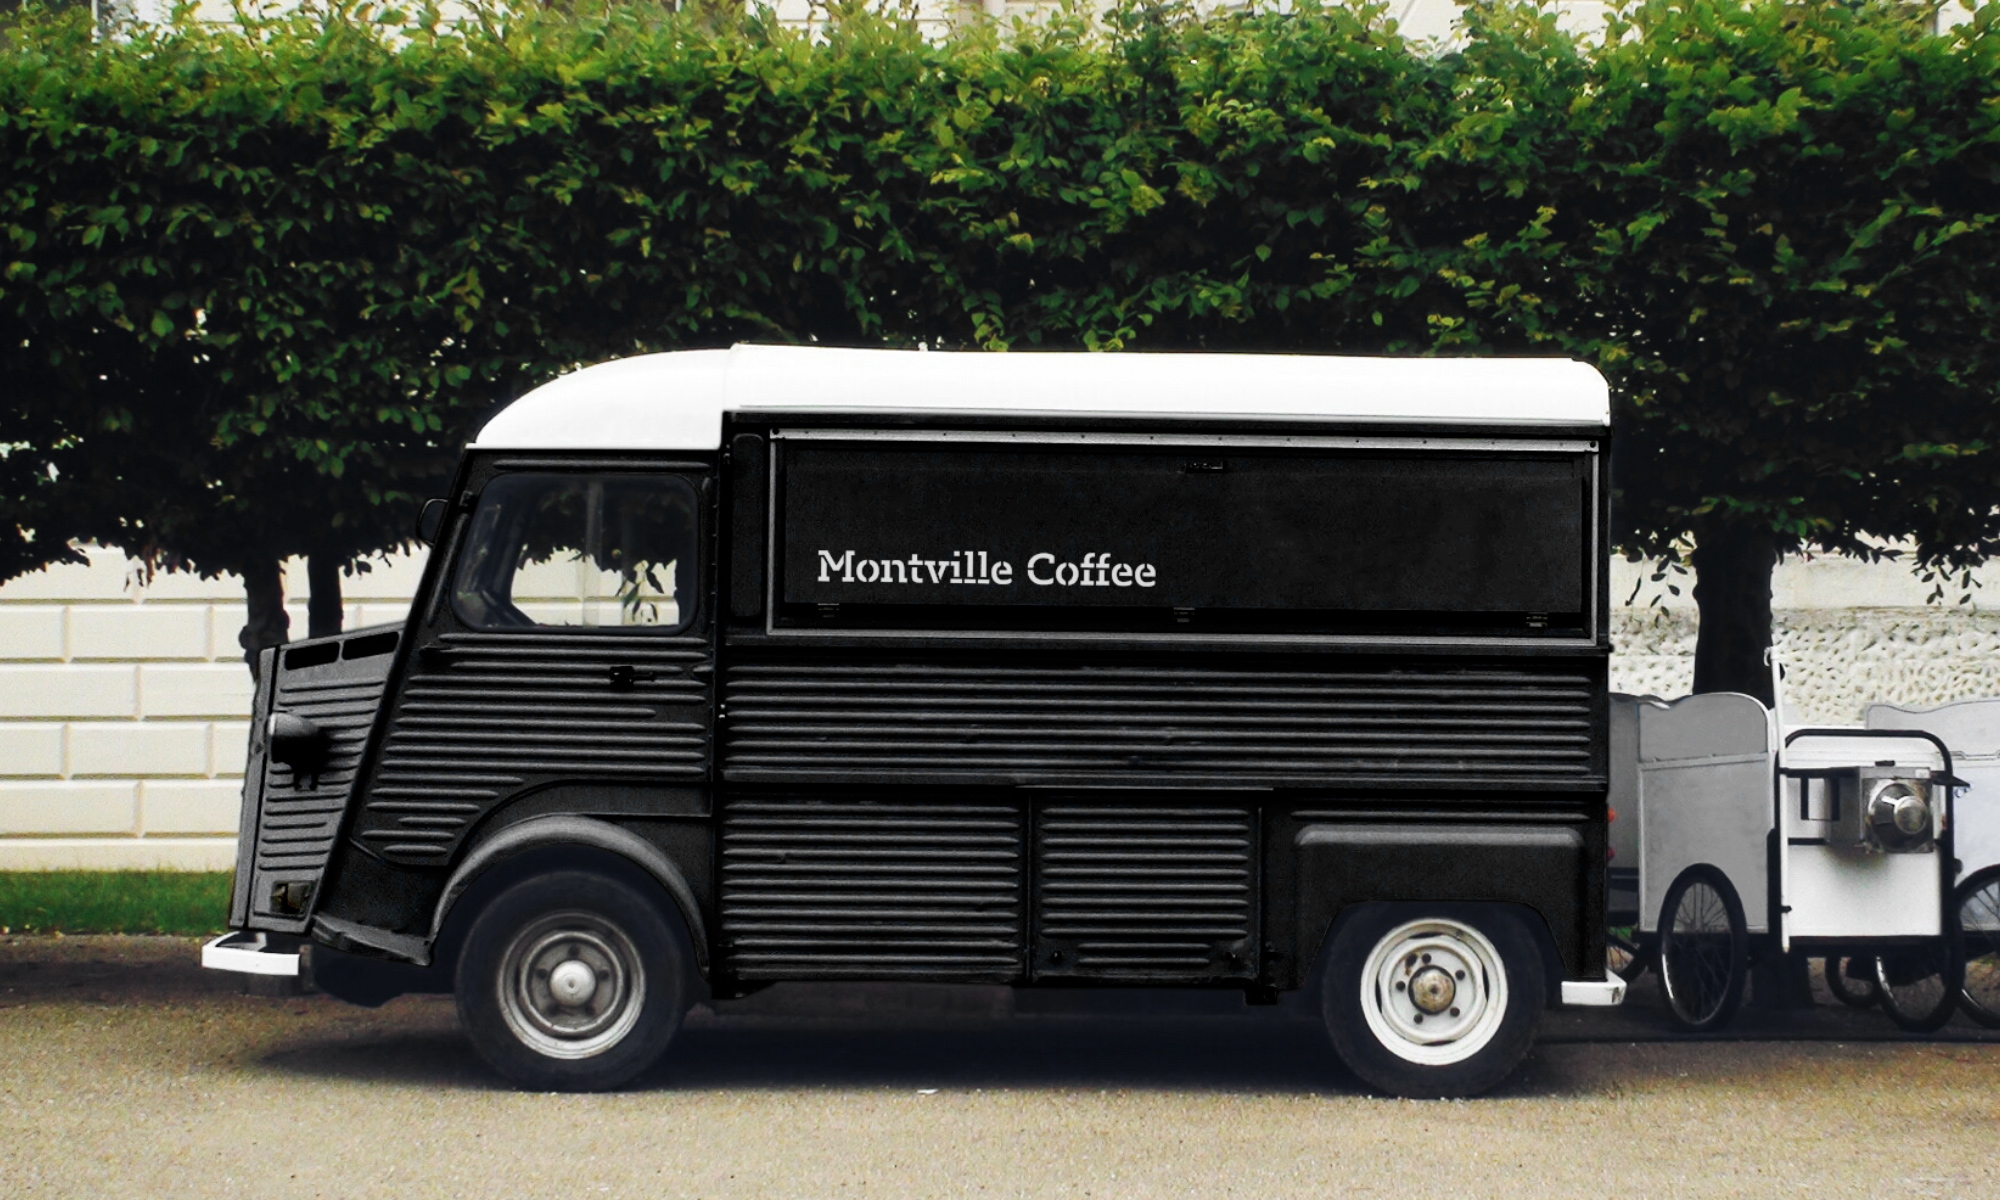 Montville Coffee truck